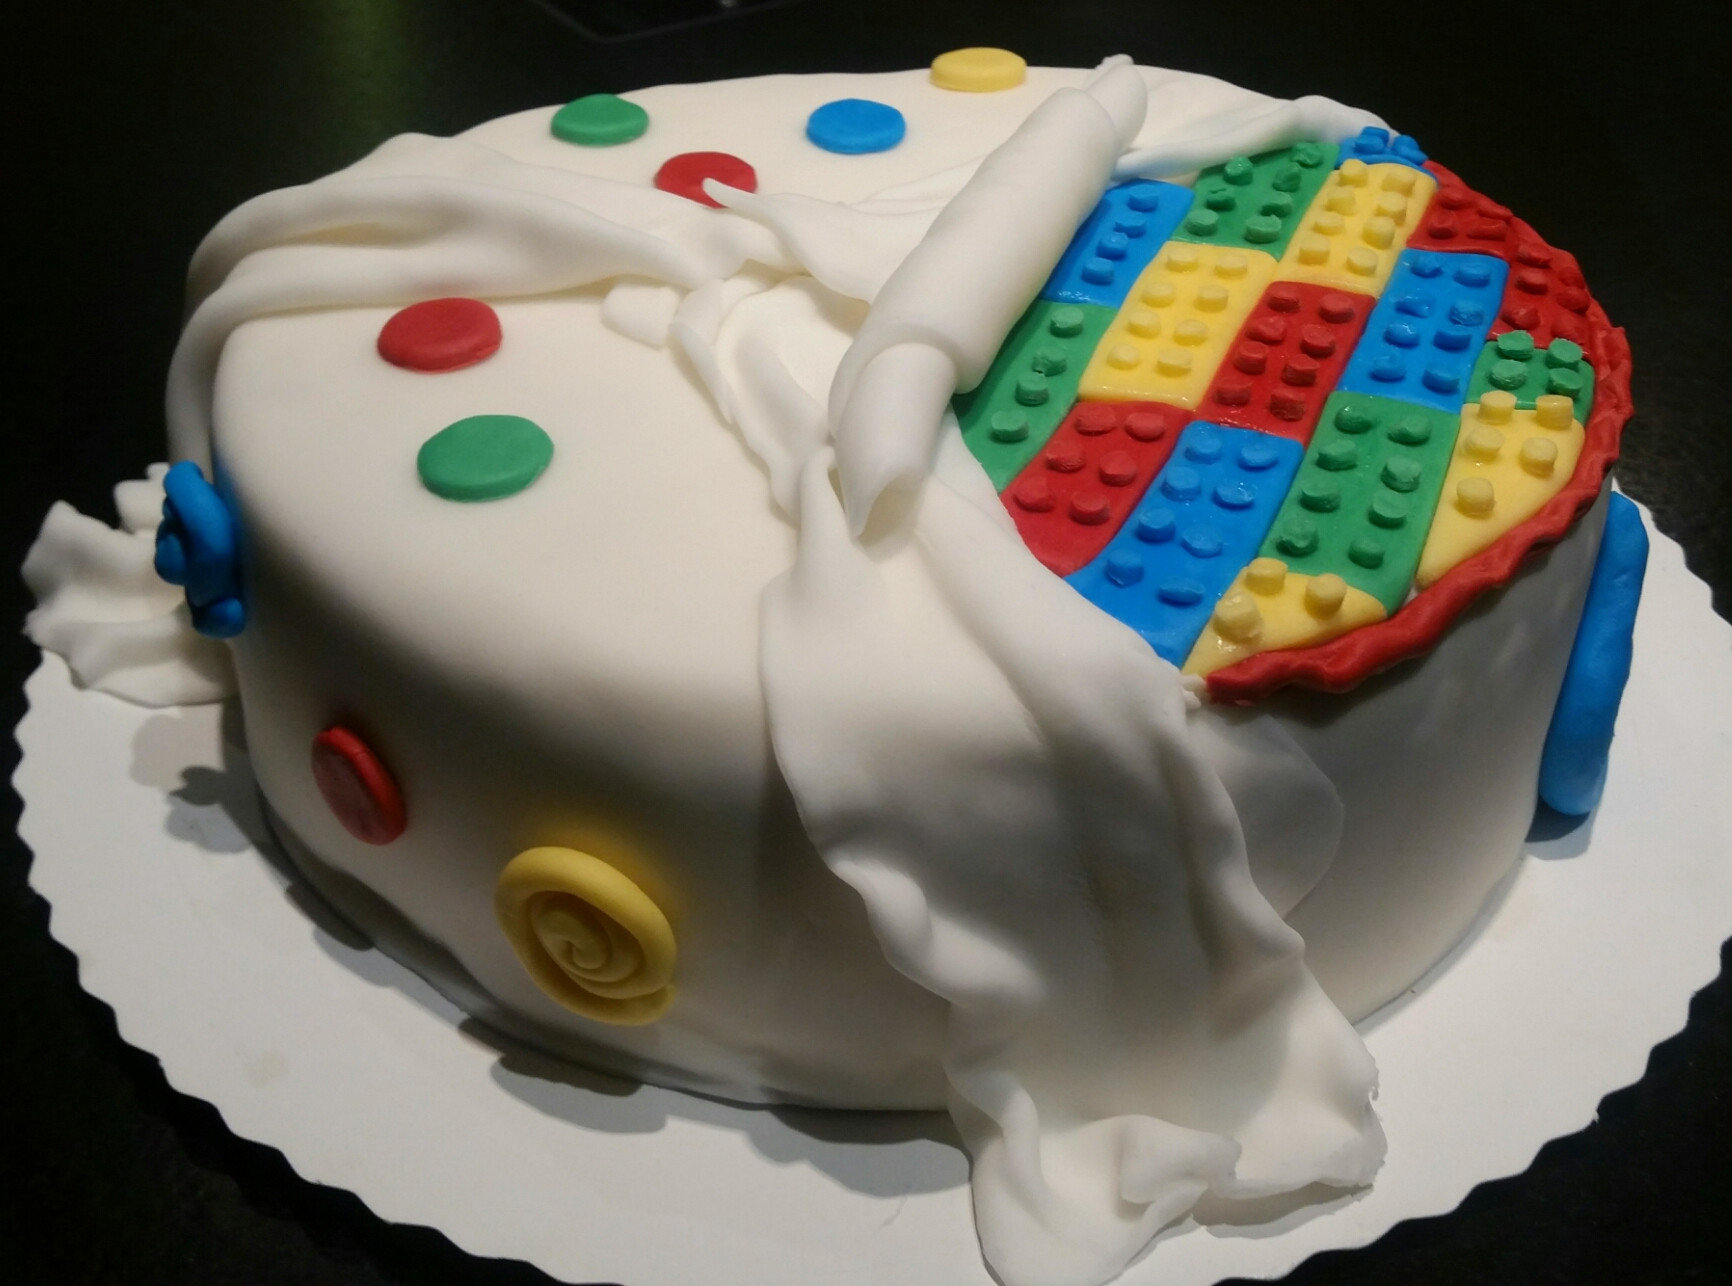 Lego Geburtstagstorte
 Lego Torte